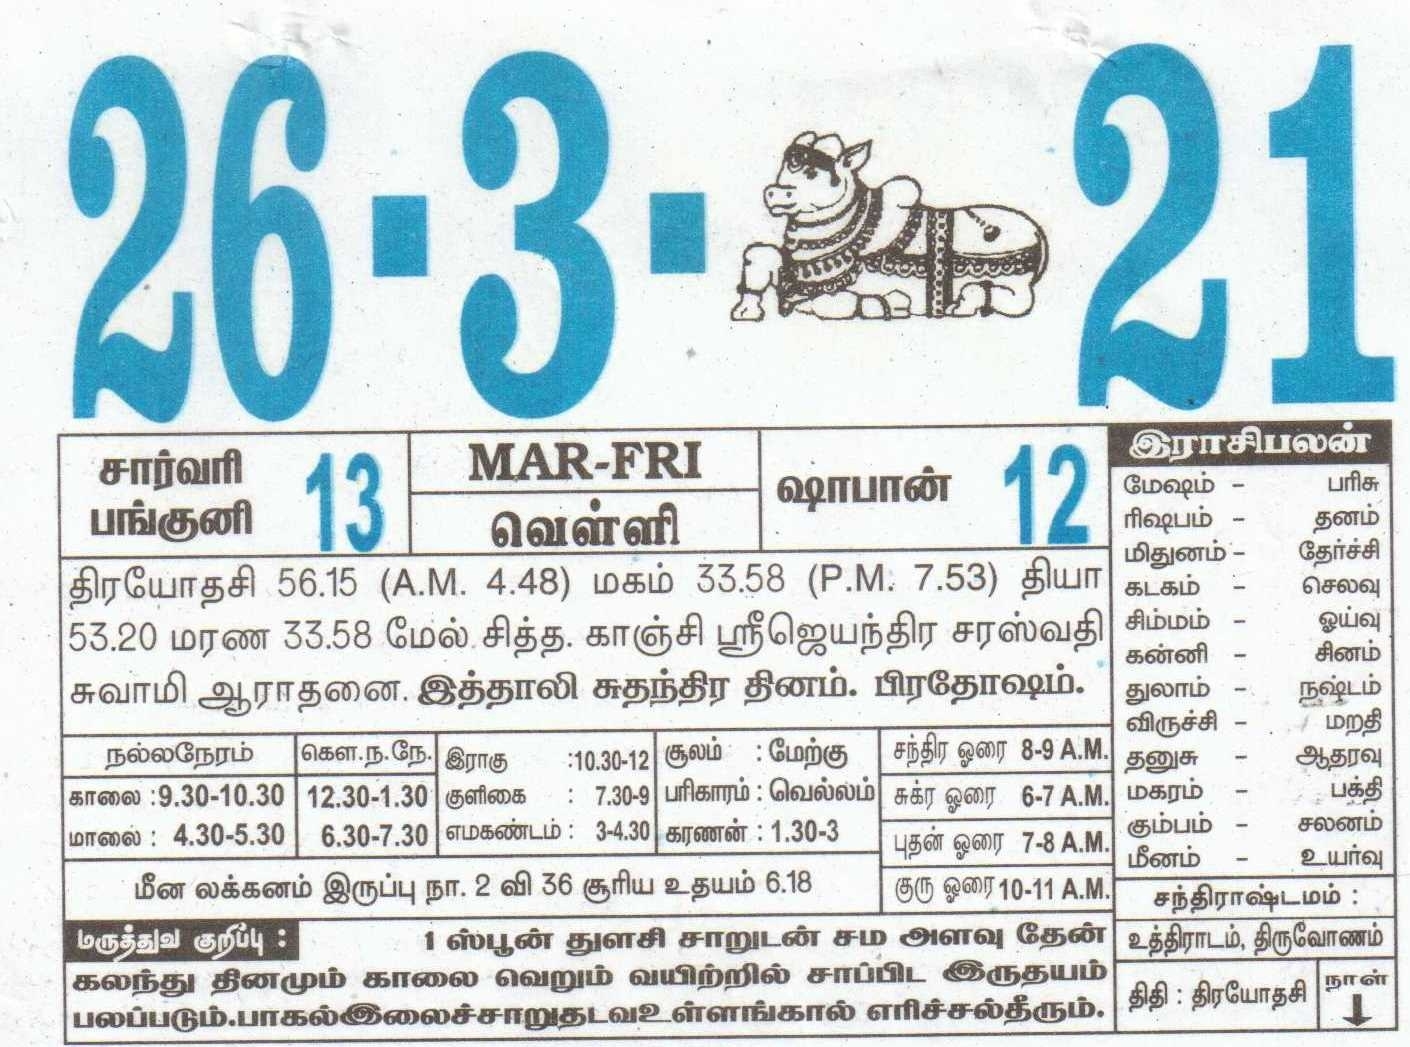 26-03-2021 Daily Calendar | Date 26 , January Daily Tear Off Calendar | Daily Panchangam Rasi Palan Tamil Calendar 2021 August Muhurtham Dates